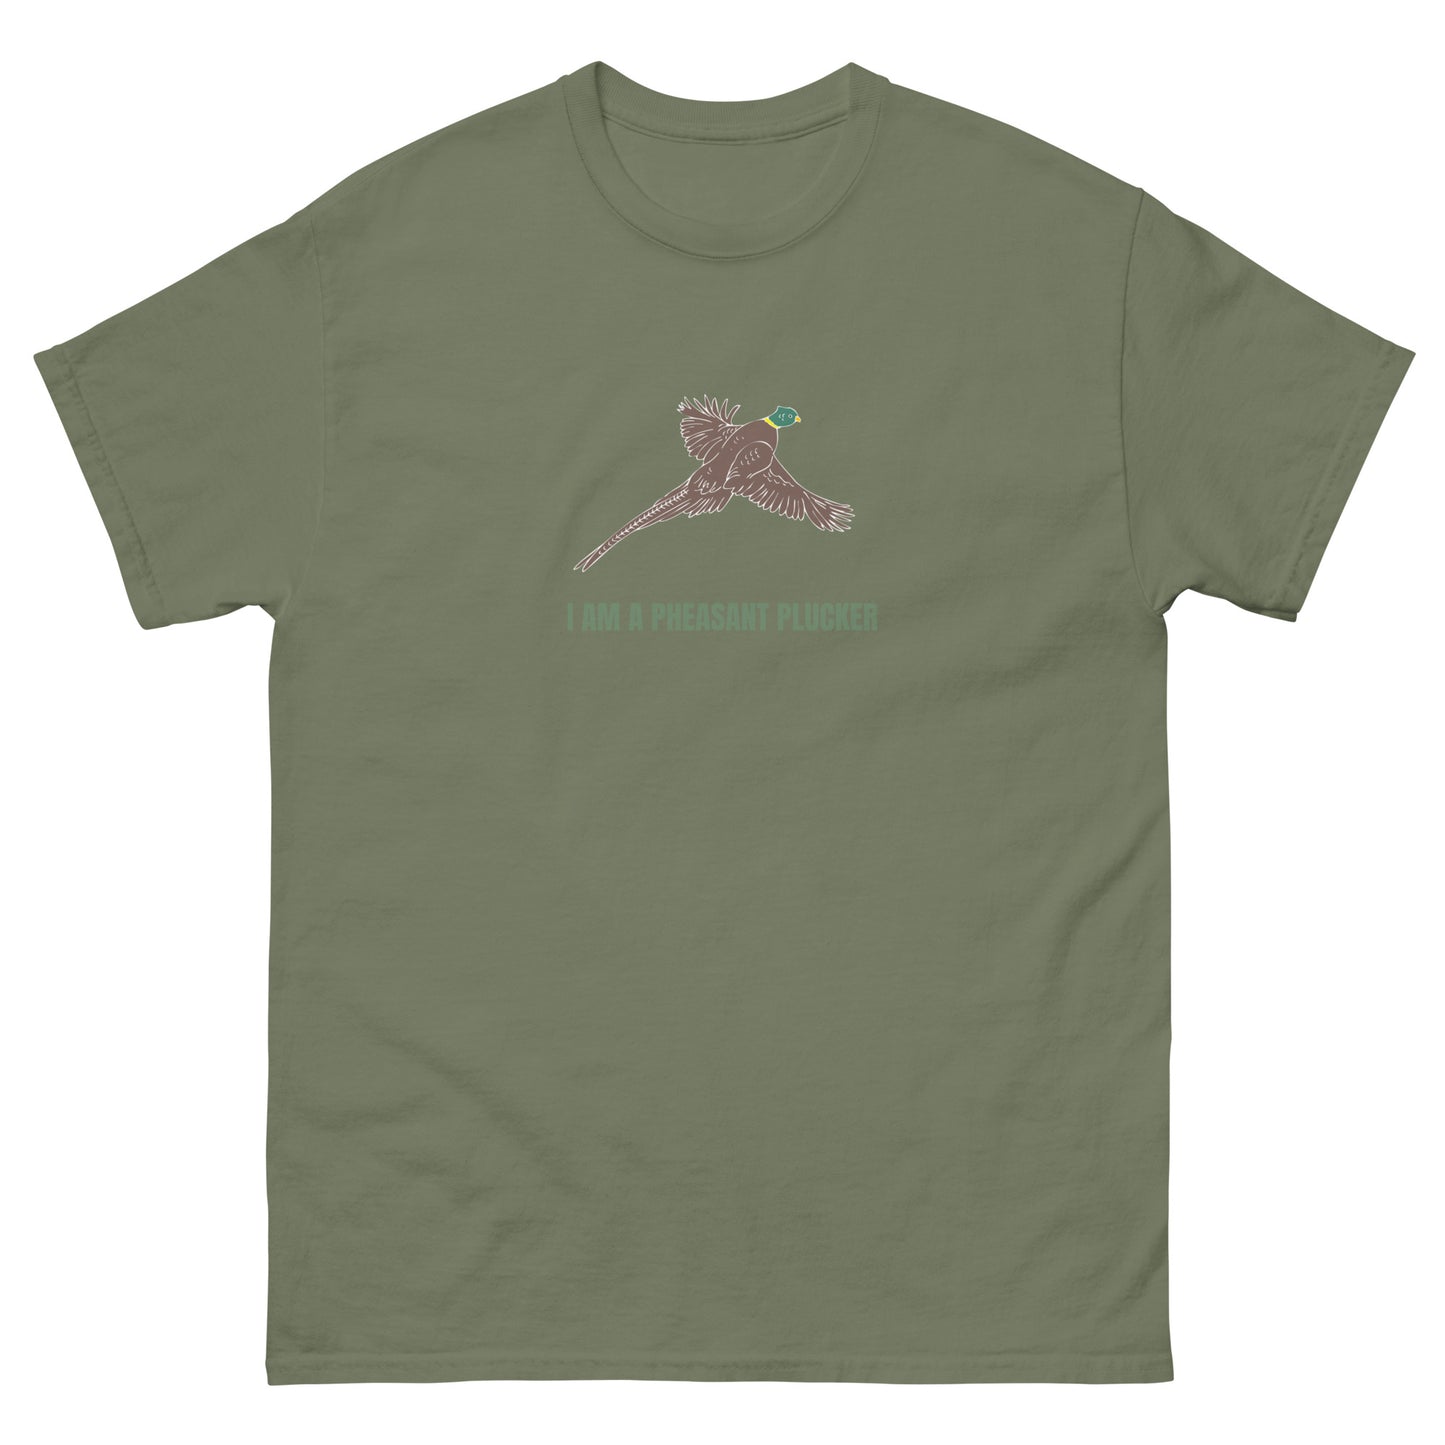 I am a pheasant plucker - Unisex T-Shirt